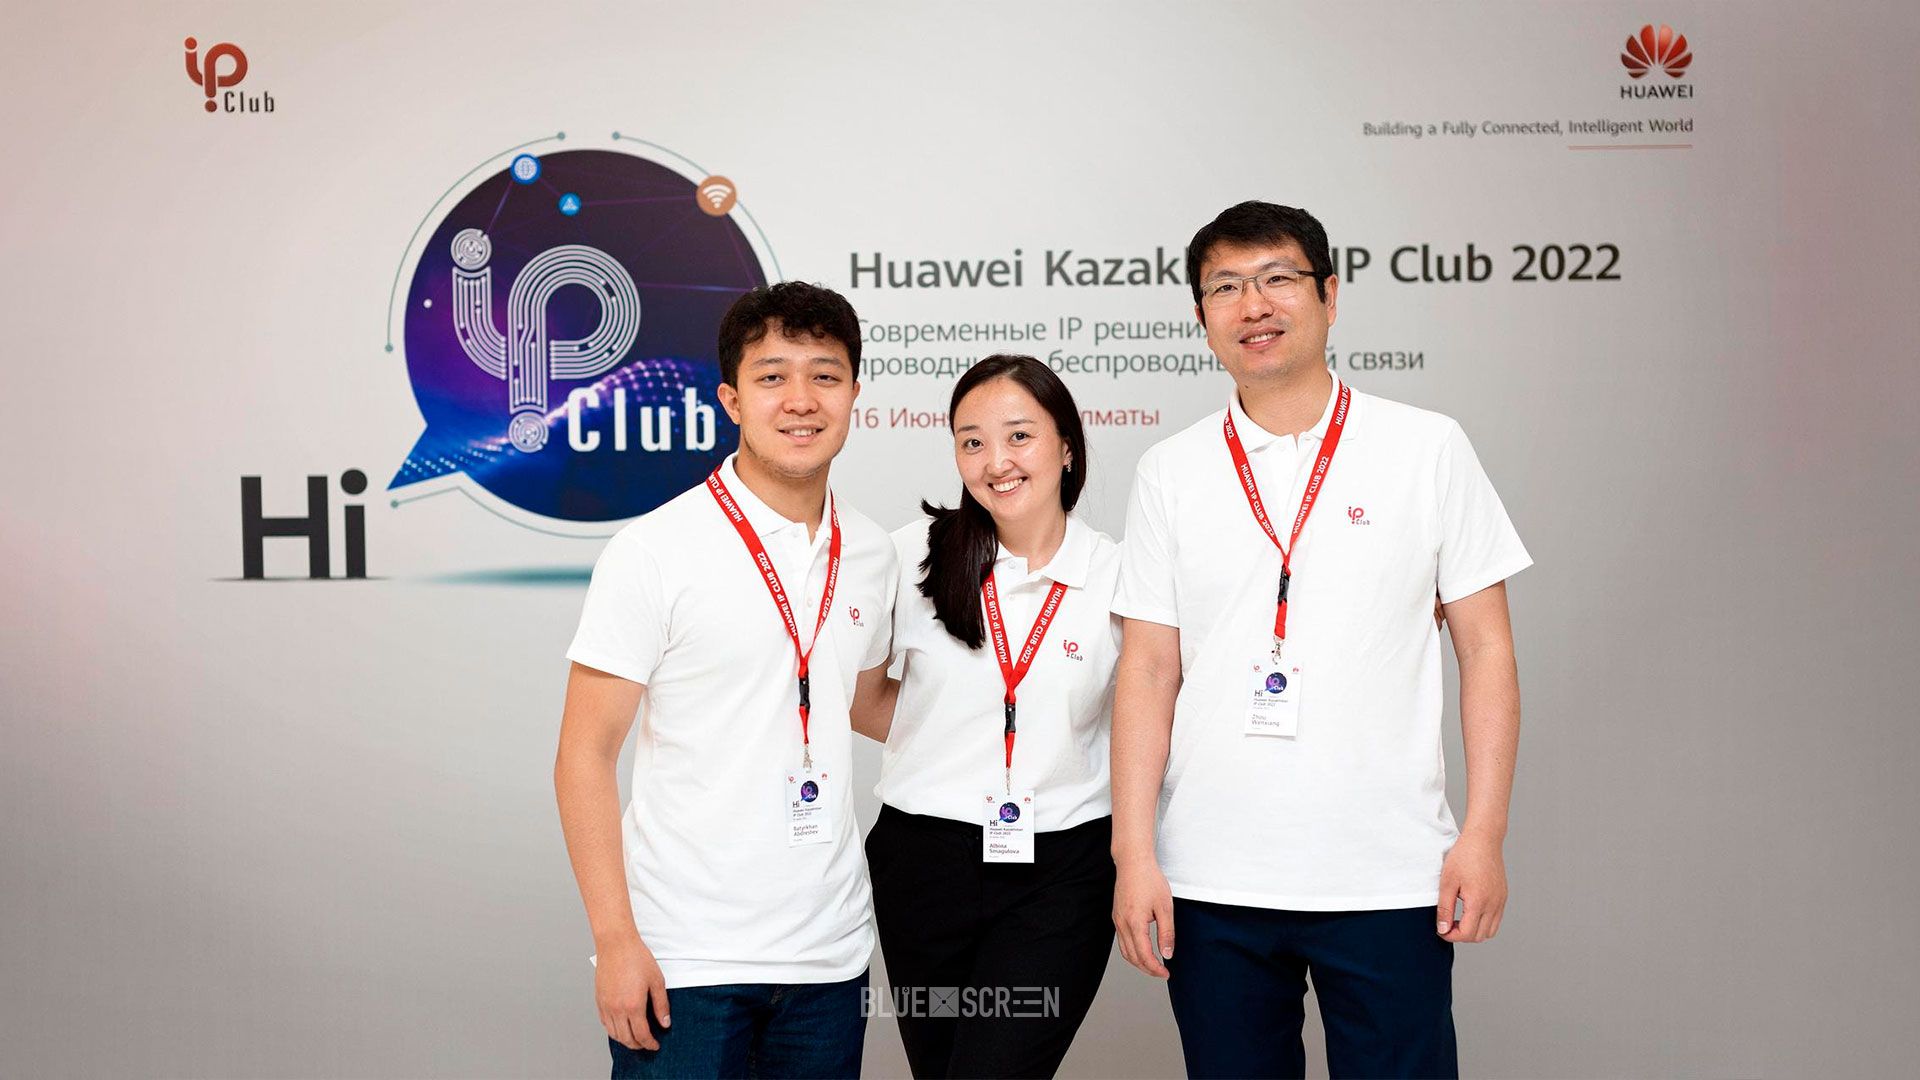  Huawei IP Club 2022